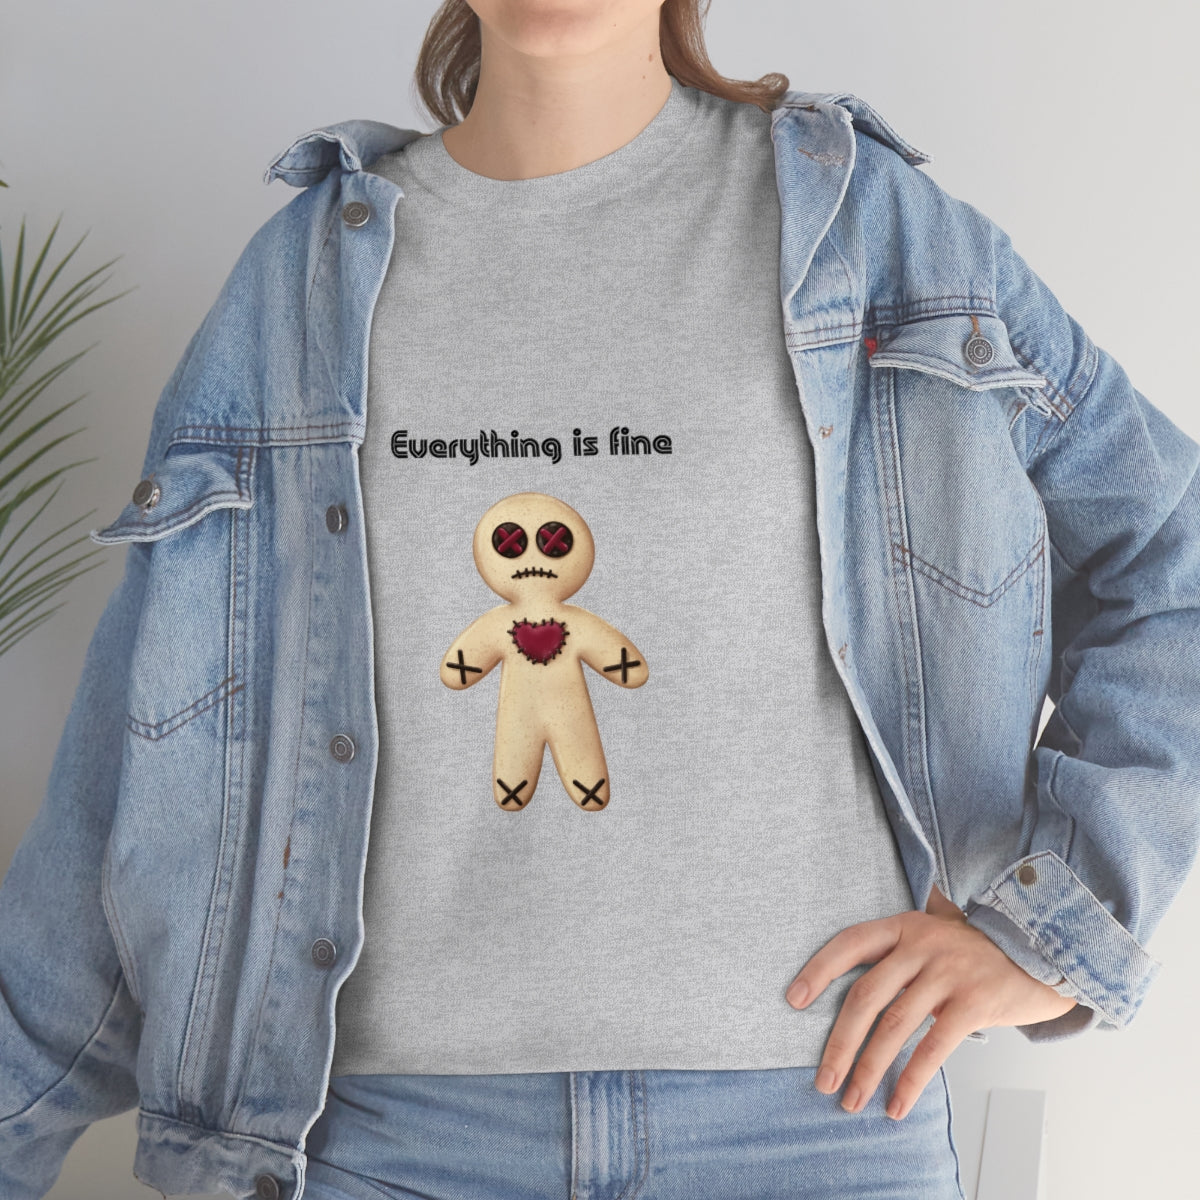 Everything is Fine Tshirt, I'm Fine Everything is Fine, Gingerbread Man, Christmas Shirt, Chronic Pain Shirt, Anxiety Shirt, FunnyTshirts - The Good Life Vibe